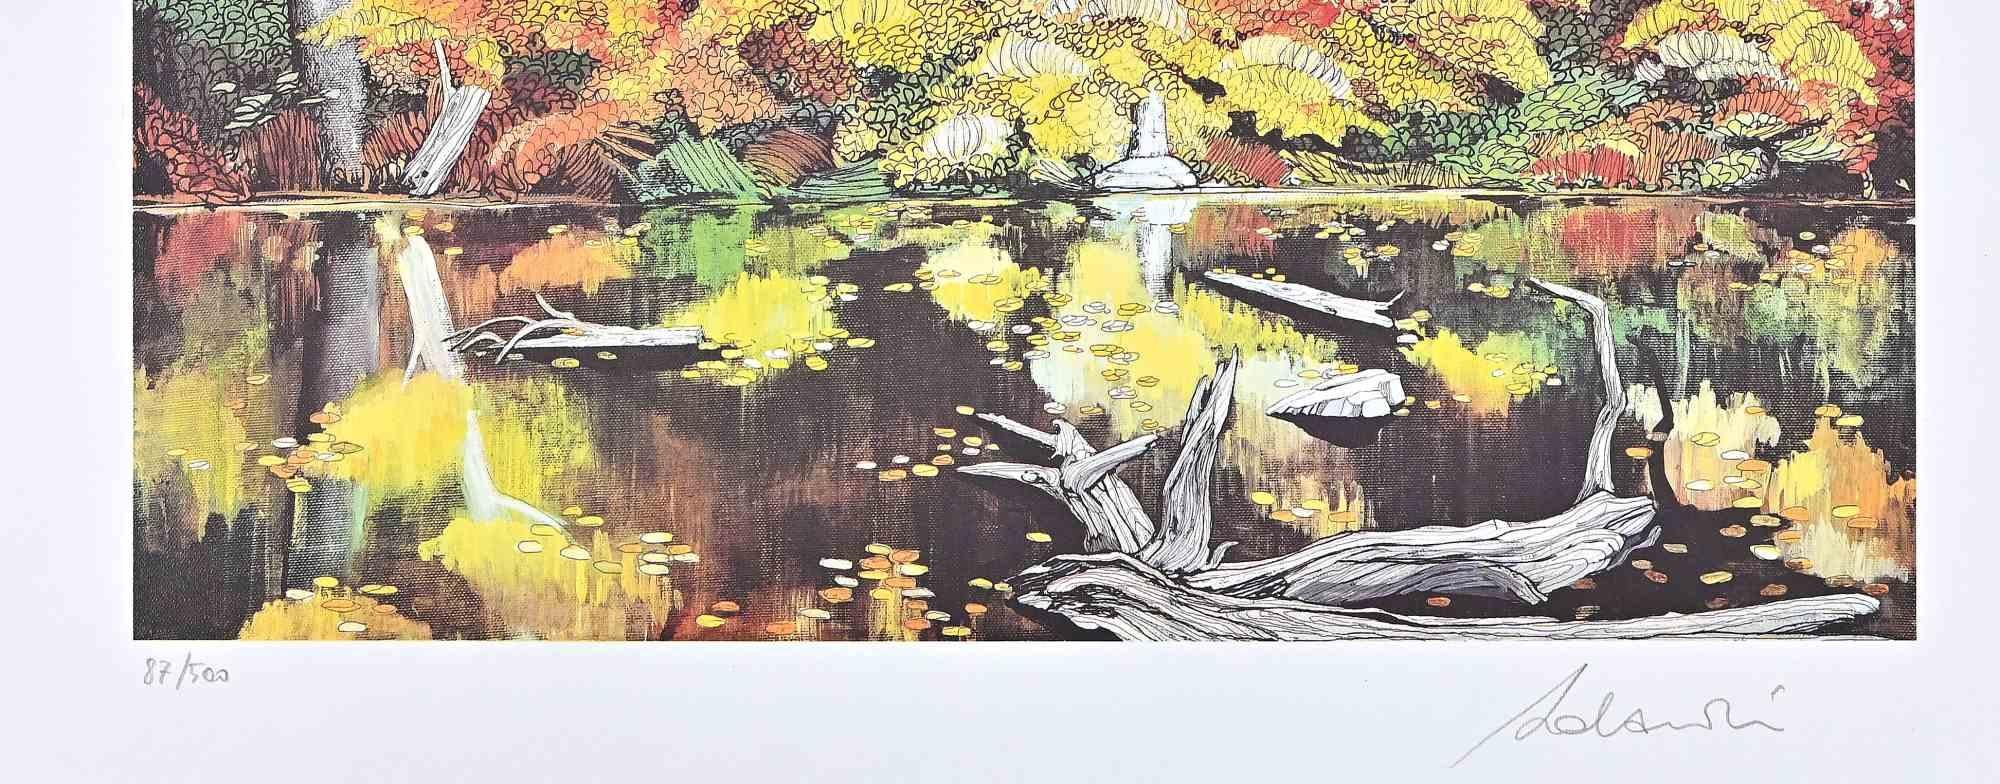 Beside The Lake - Screen Print by Rolandi - 1980s - Beige Figurative Print by Rolandi (Maurizio Coccia)